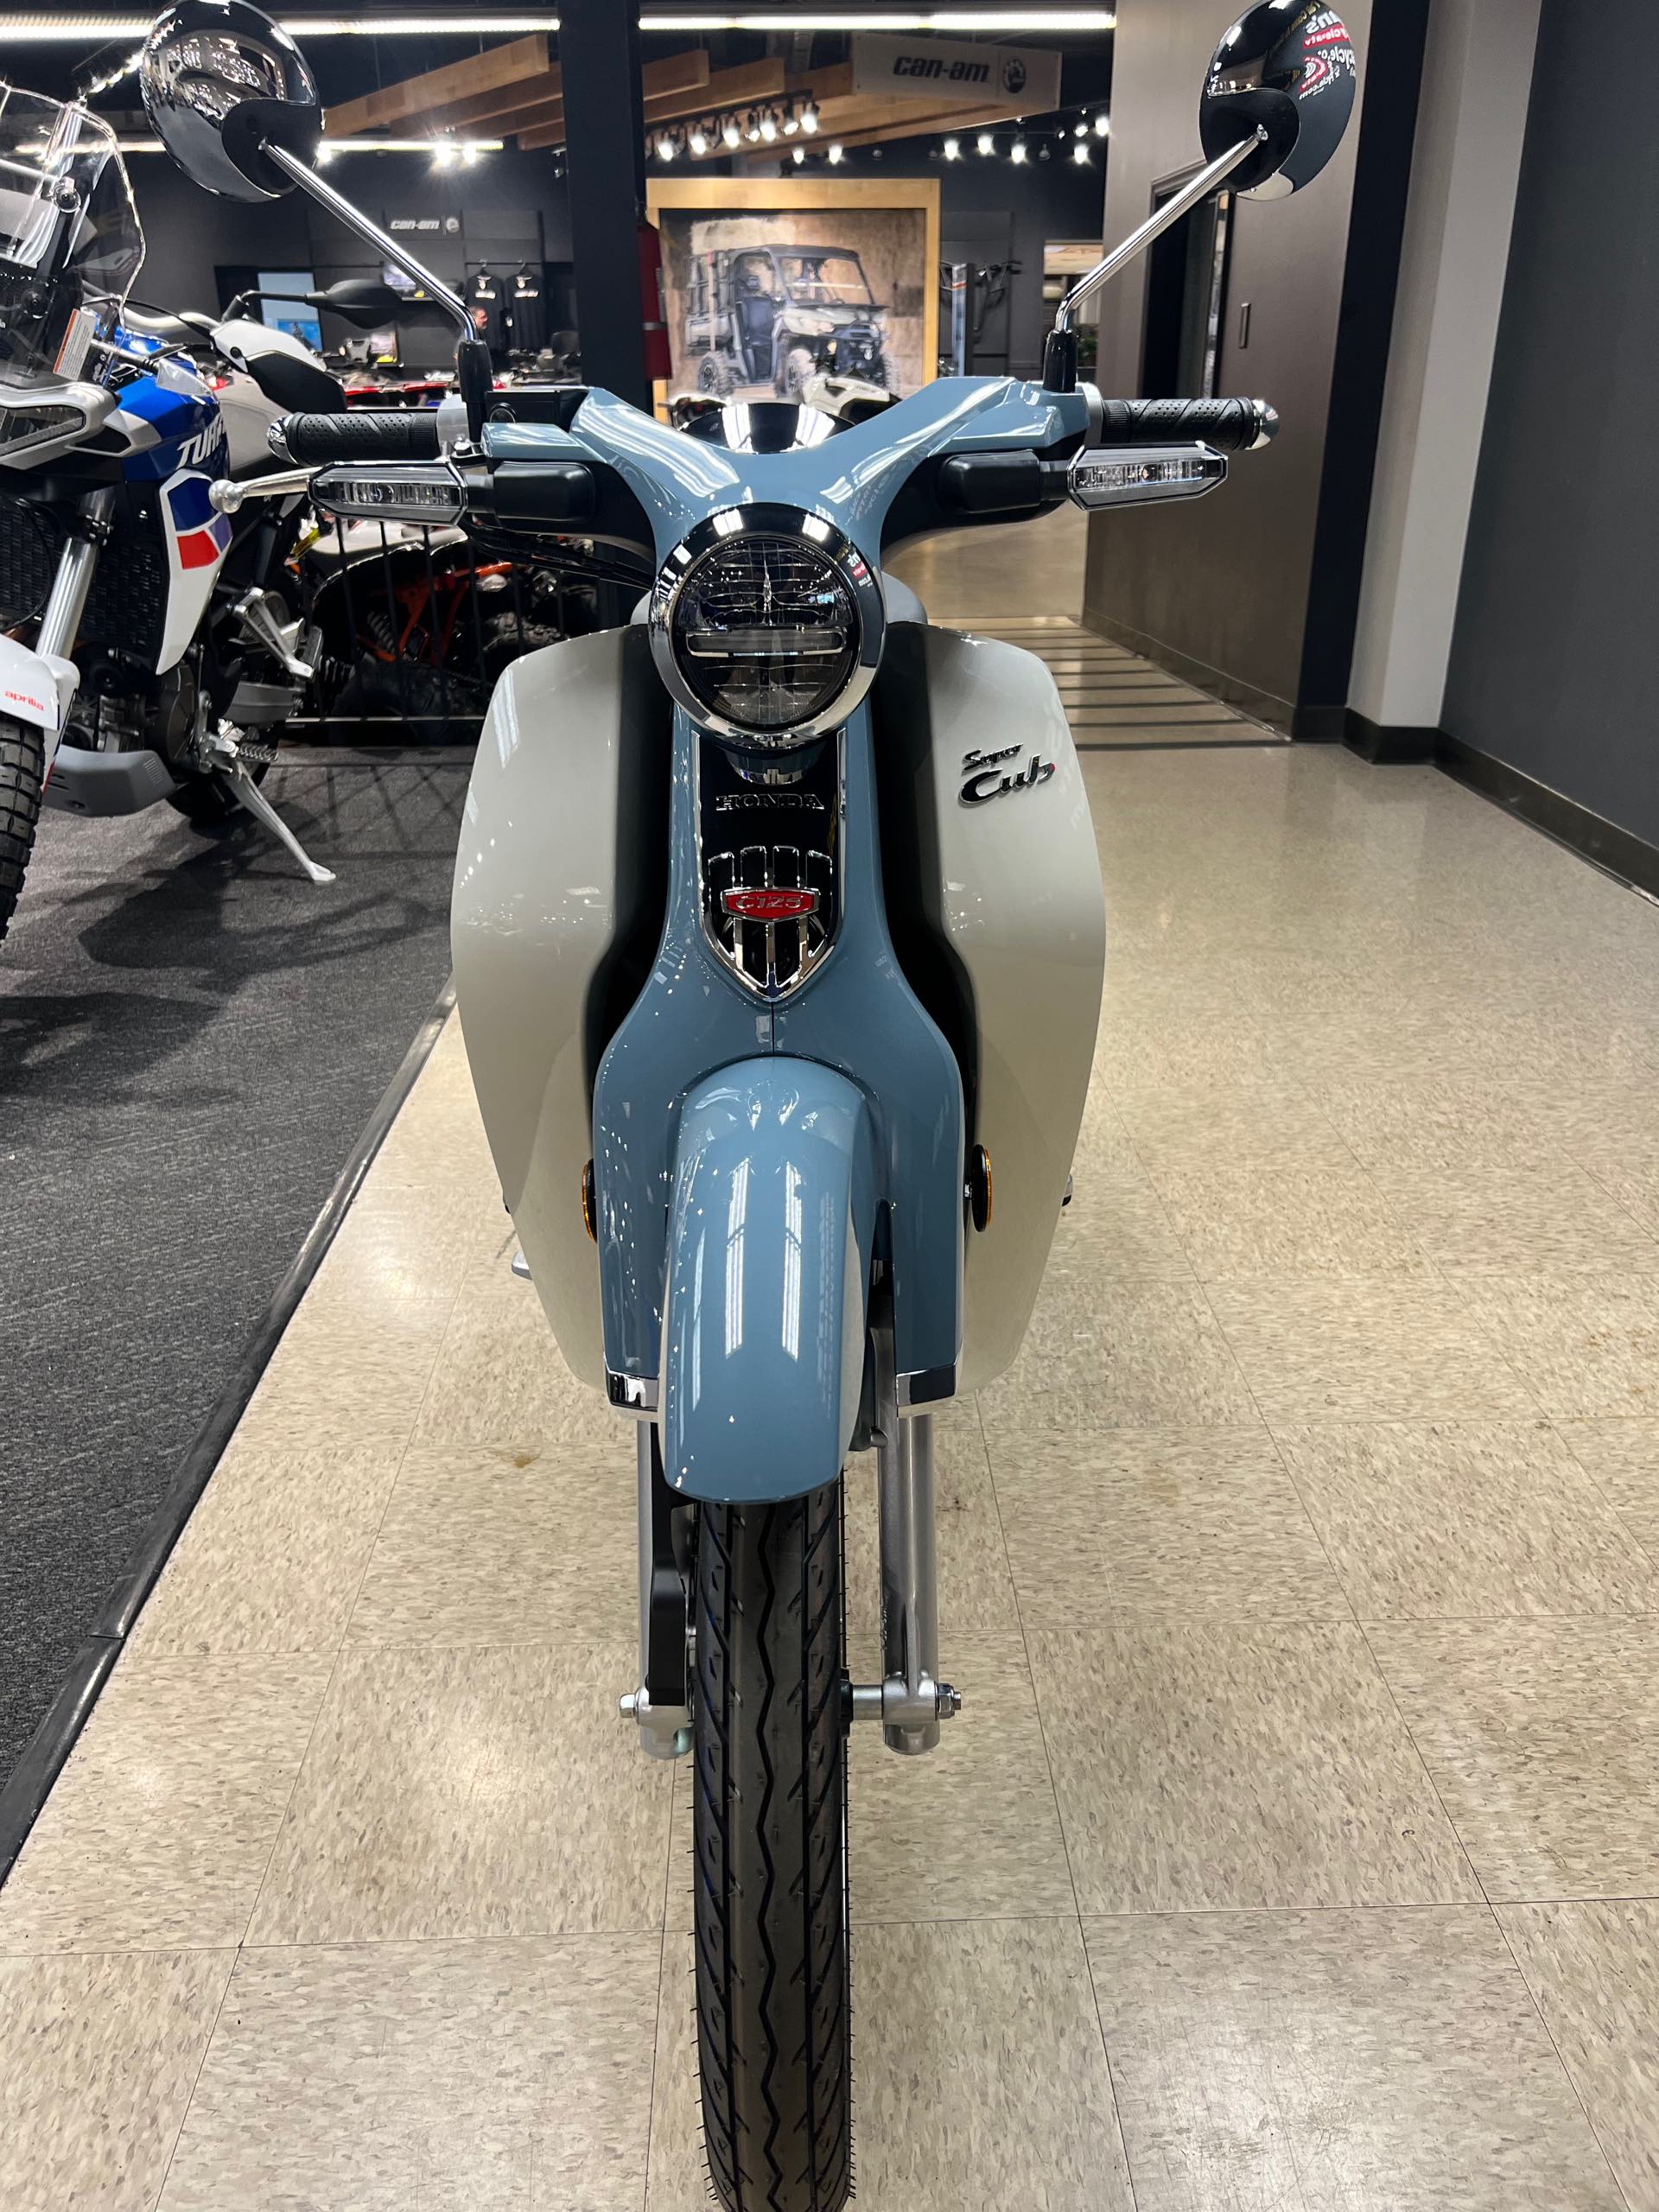 2024 Honda Super Cub C125 ABS at Sloans Motorcycle ATV, Murfreesboro, TN, 37129